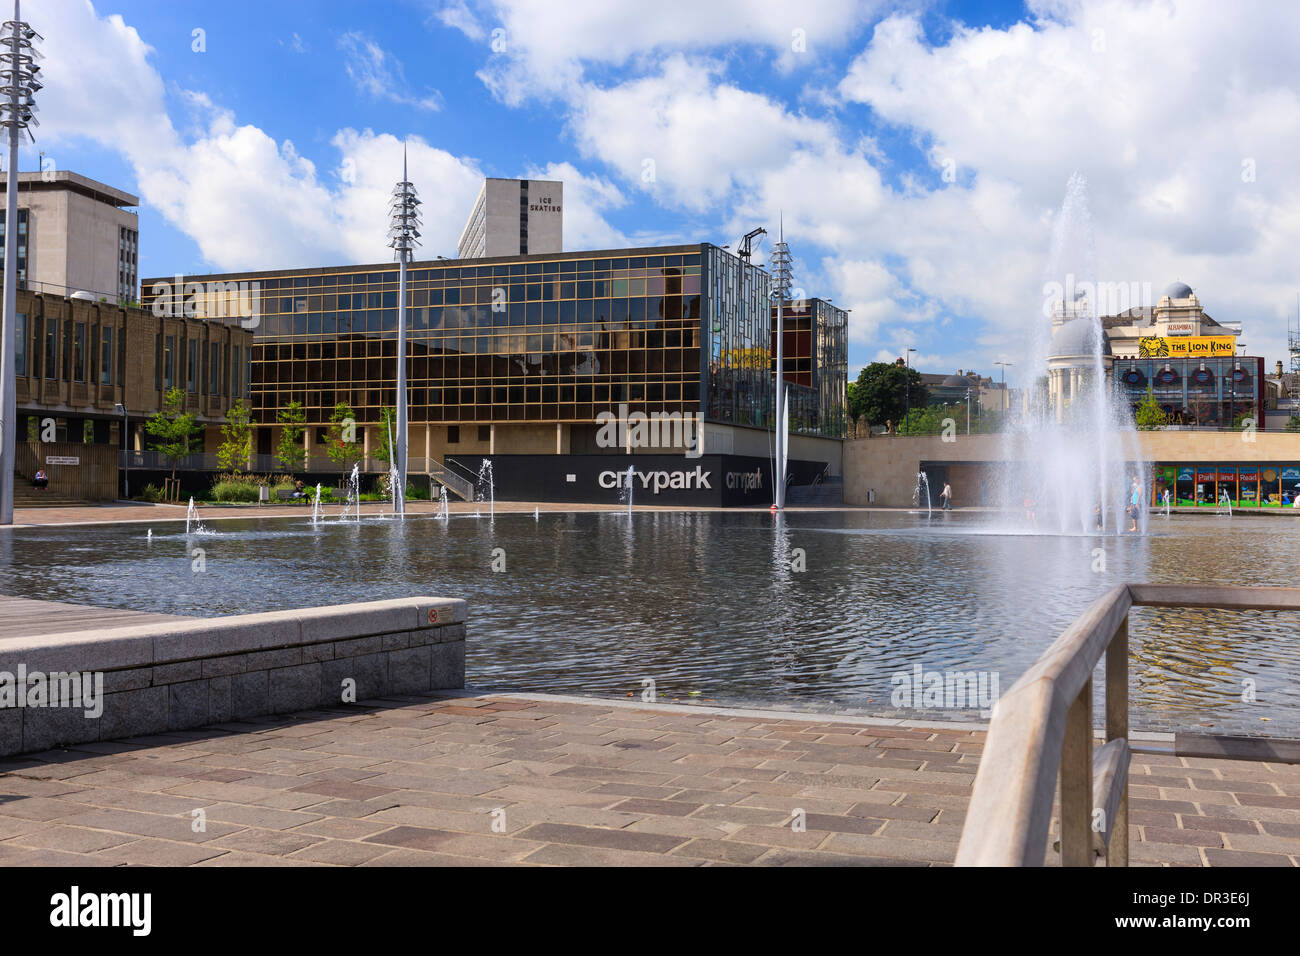 City Park Fountains and City Hall Bradford West Yorkshire England Stock Photo